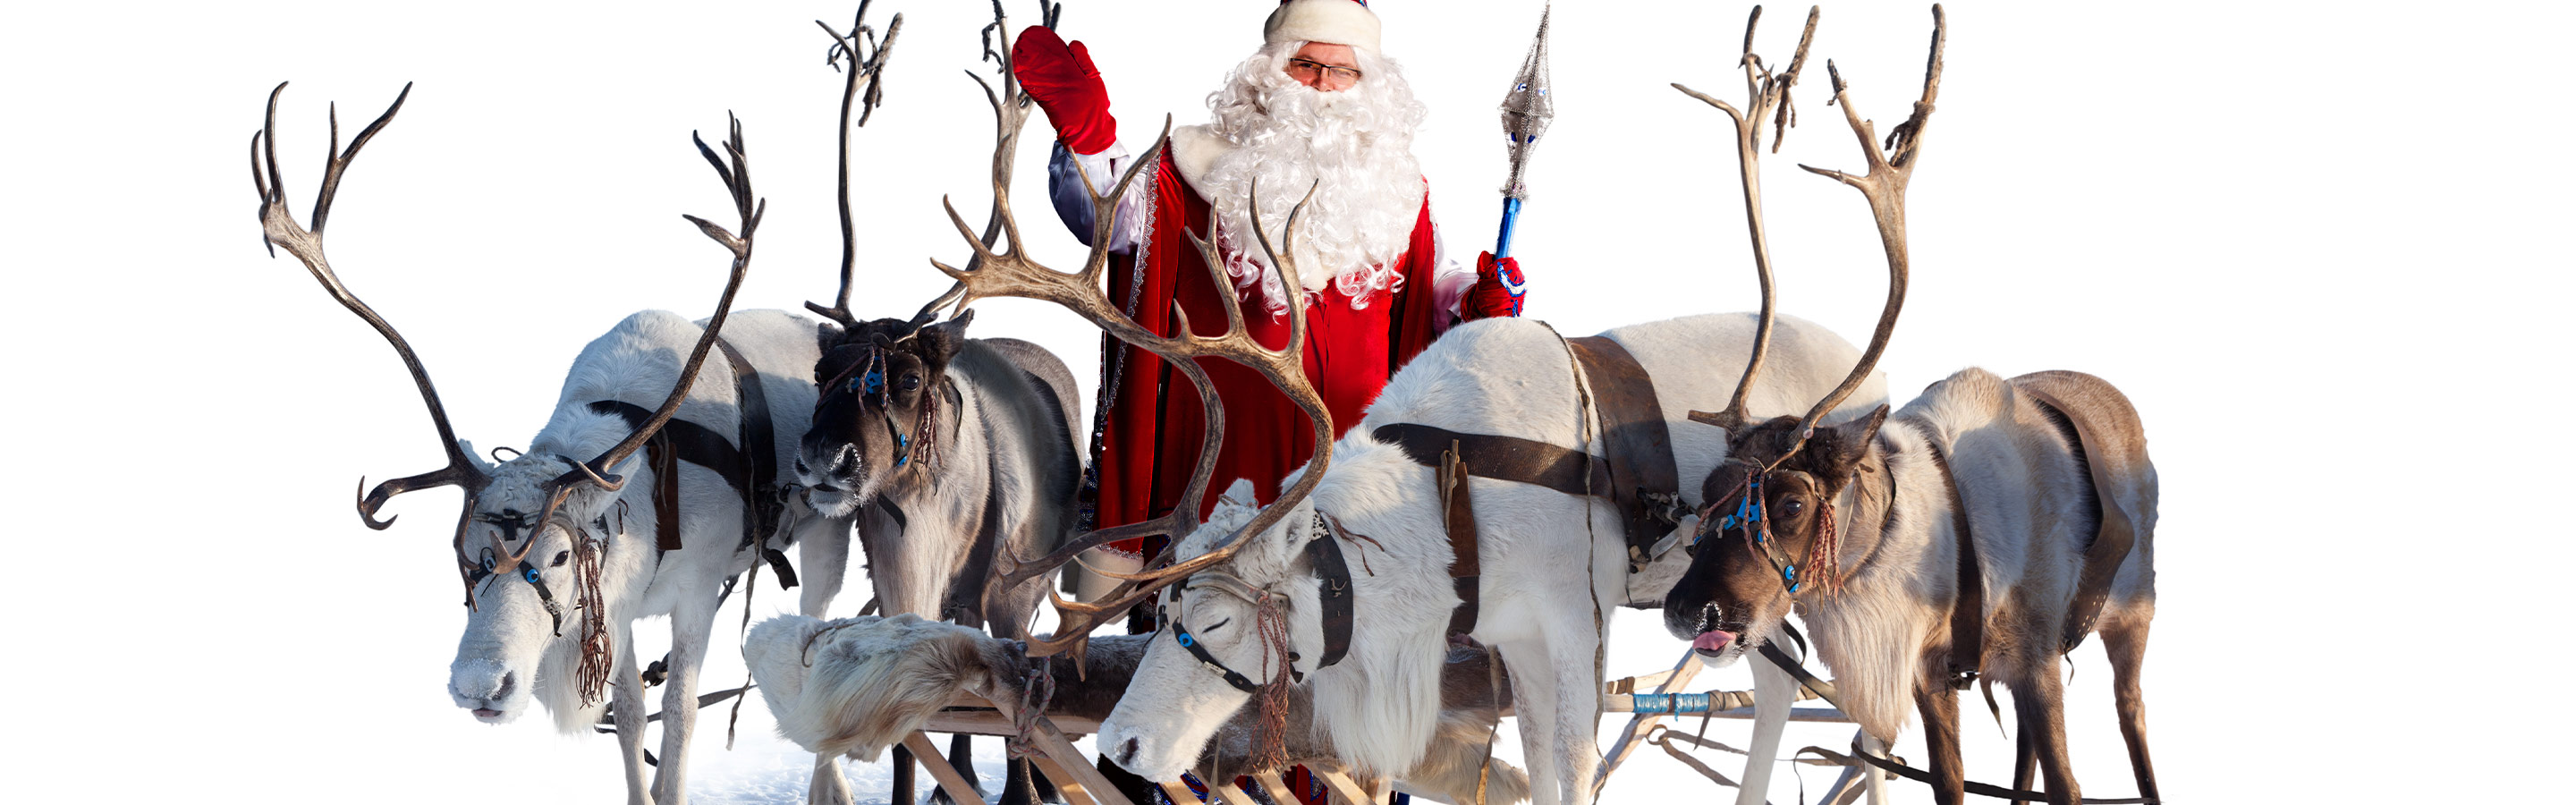 Santa stands with his reindeer